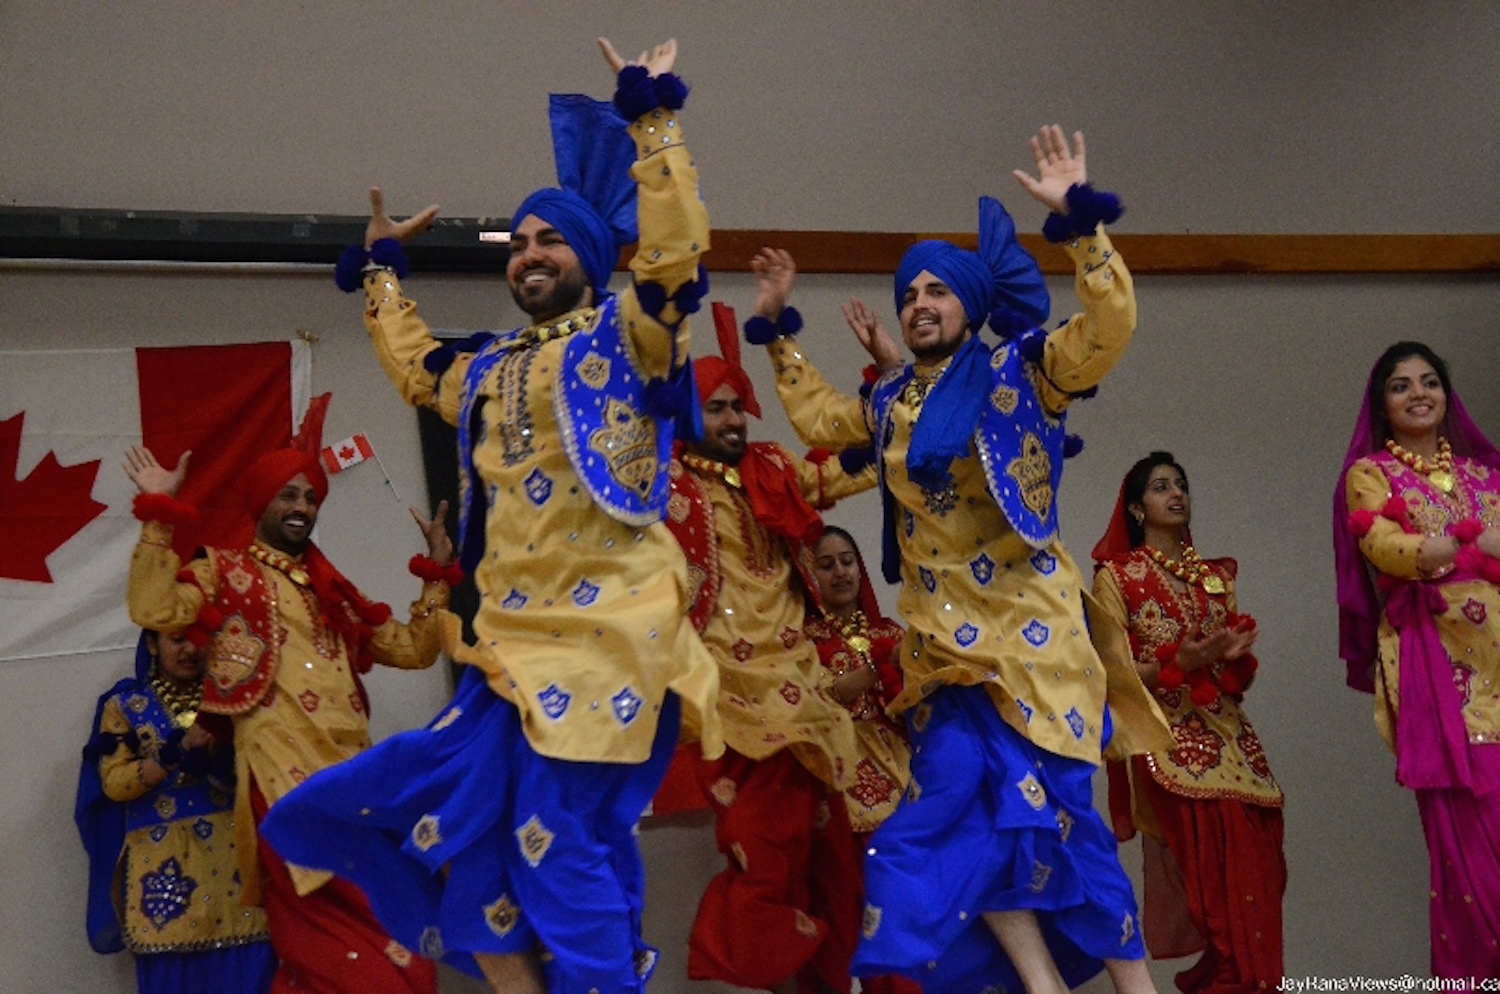   THE WORLD DANCE PROJECT    Bhangra, a&nbsp;Punjabi dance&nbsp;tradition Spring 2015  